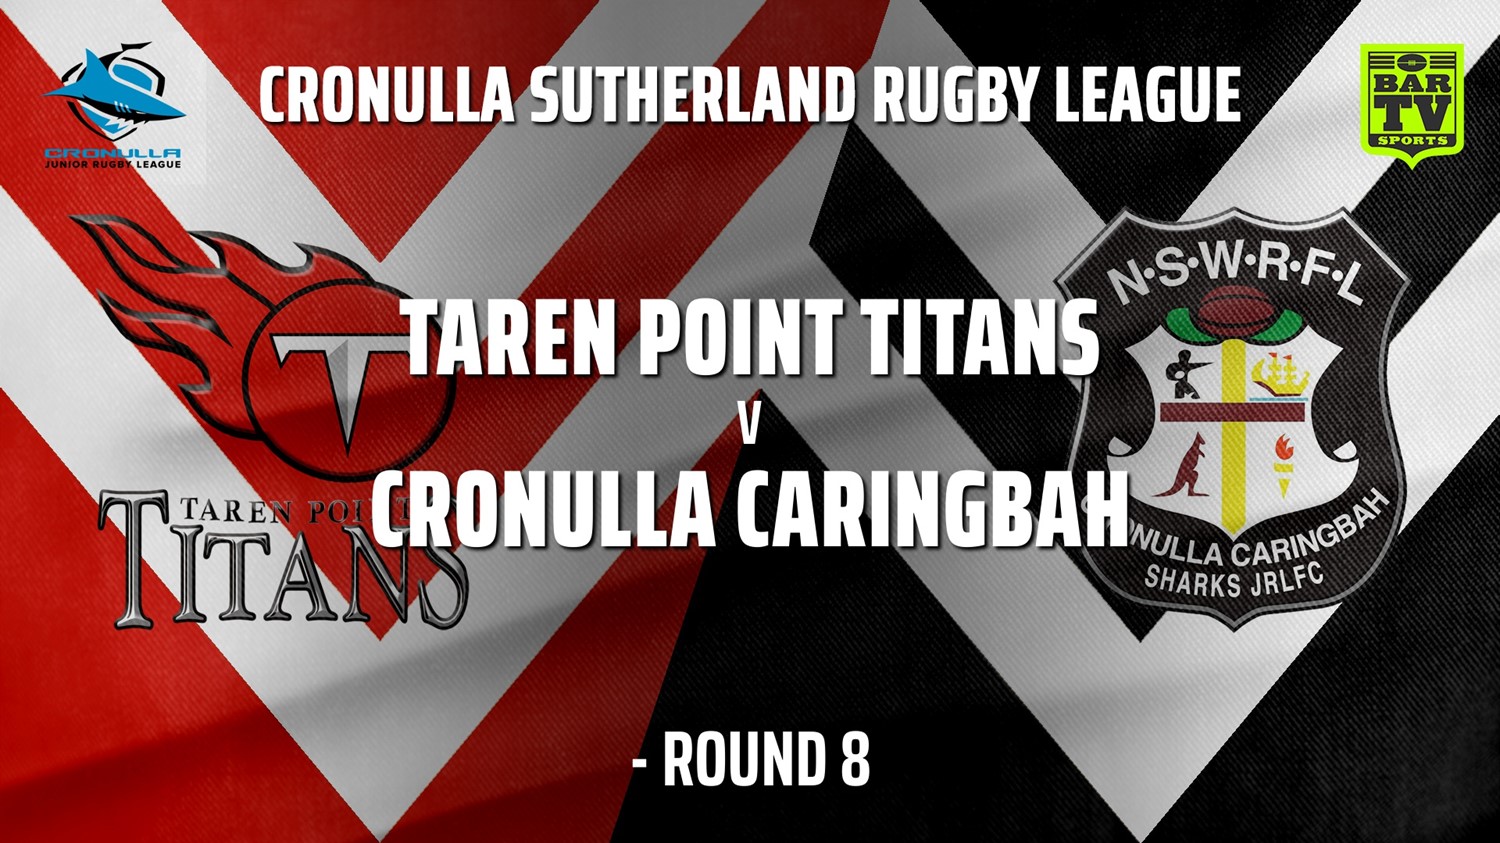 210626-Cronulla Juniors - Under 9 Silver Round 8 - Taren Point Titans v Cronulla Caringbah (1) Slate Image